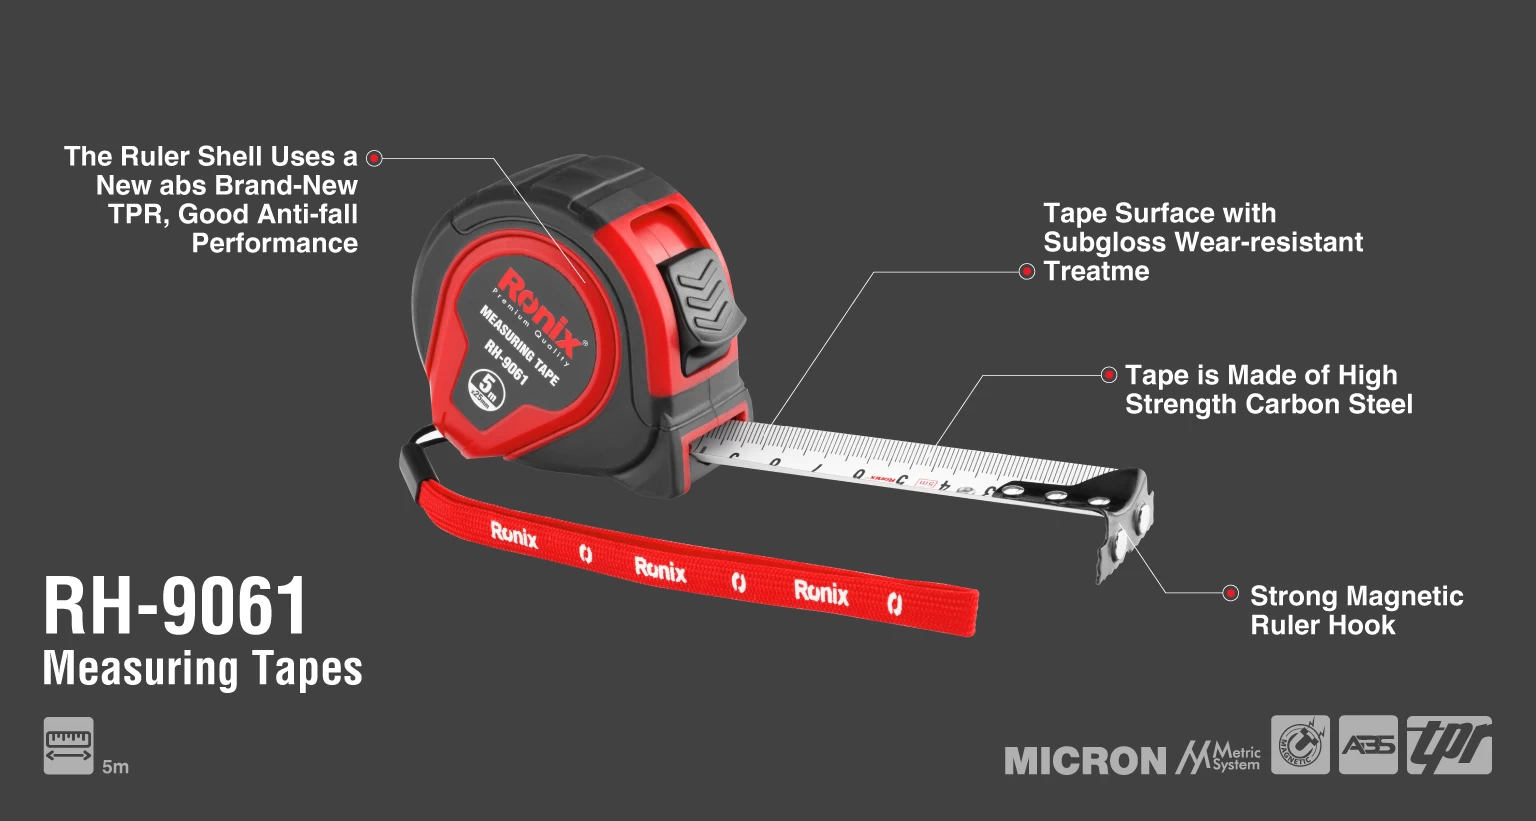 Measuring tape 5m-Micron model_details